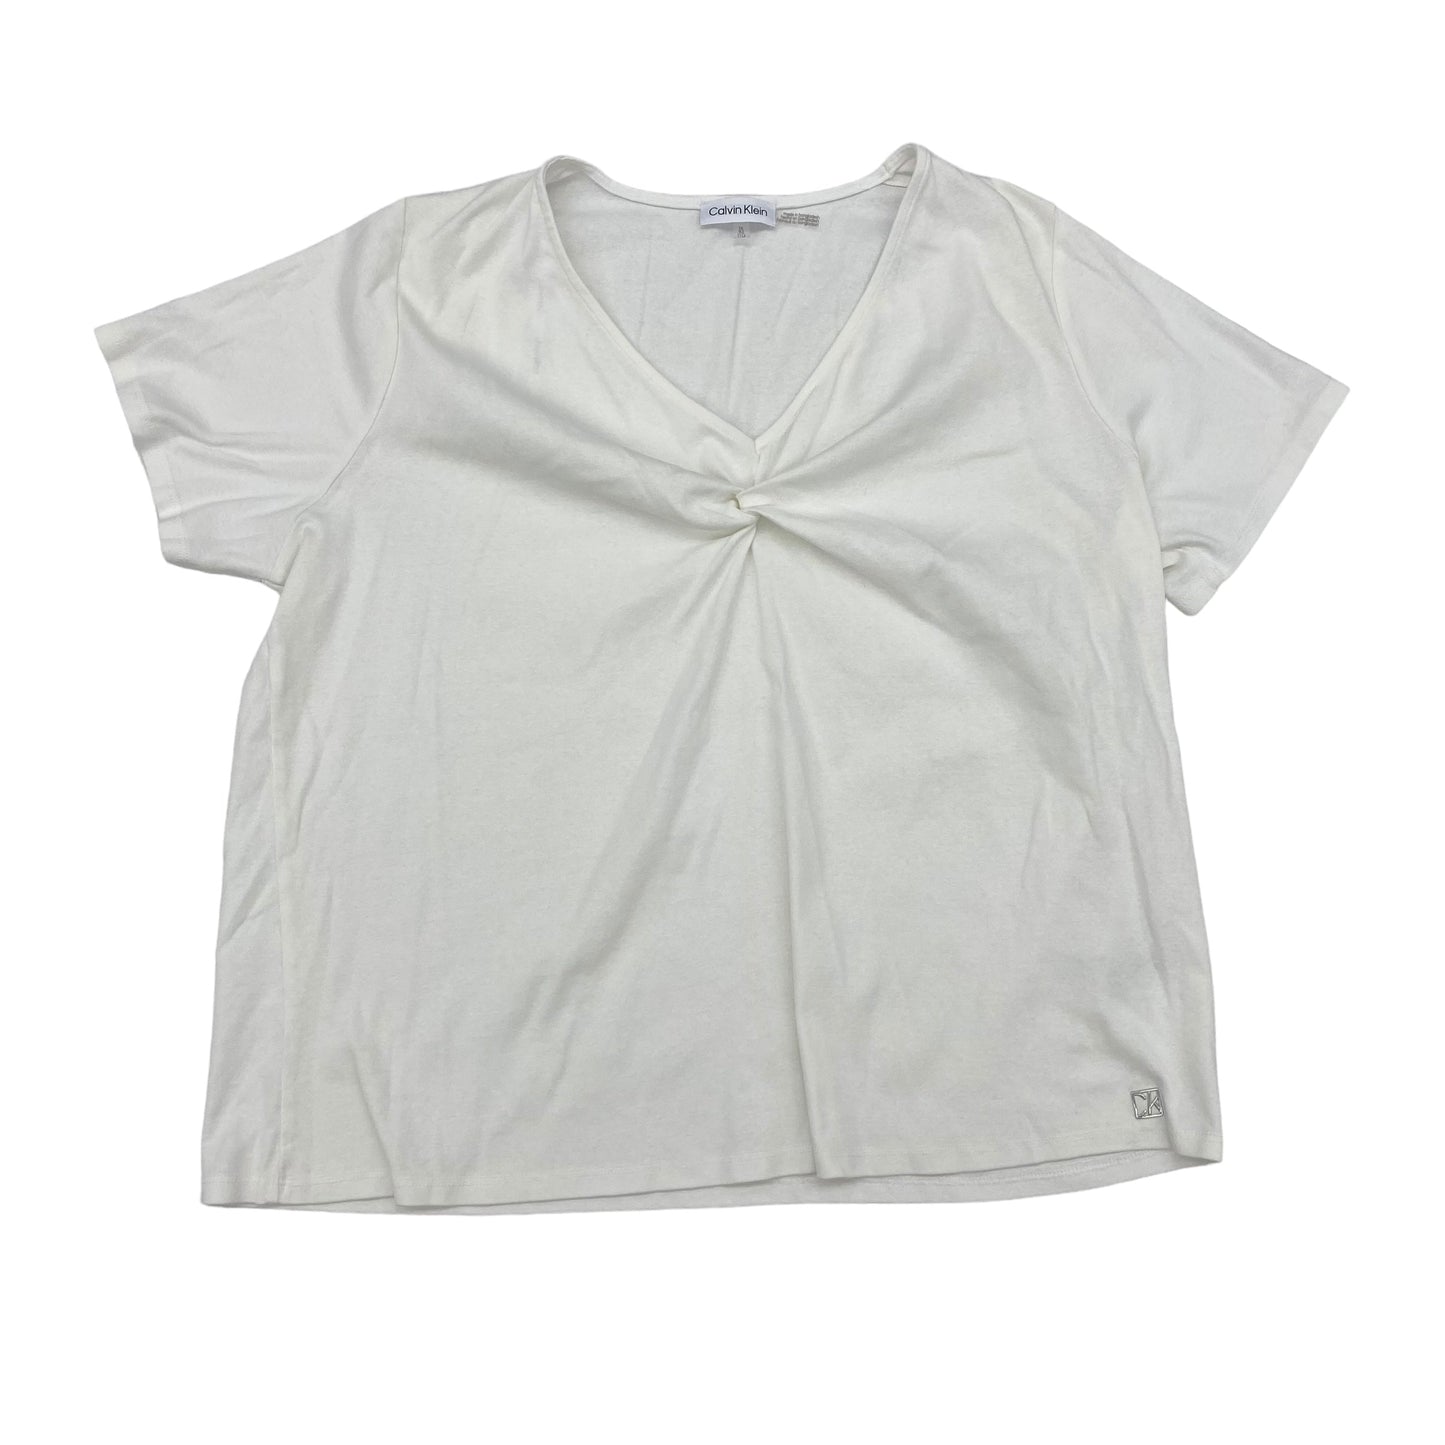 White Top Short Sleeve Basic Calvin Klein, Size 1x